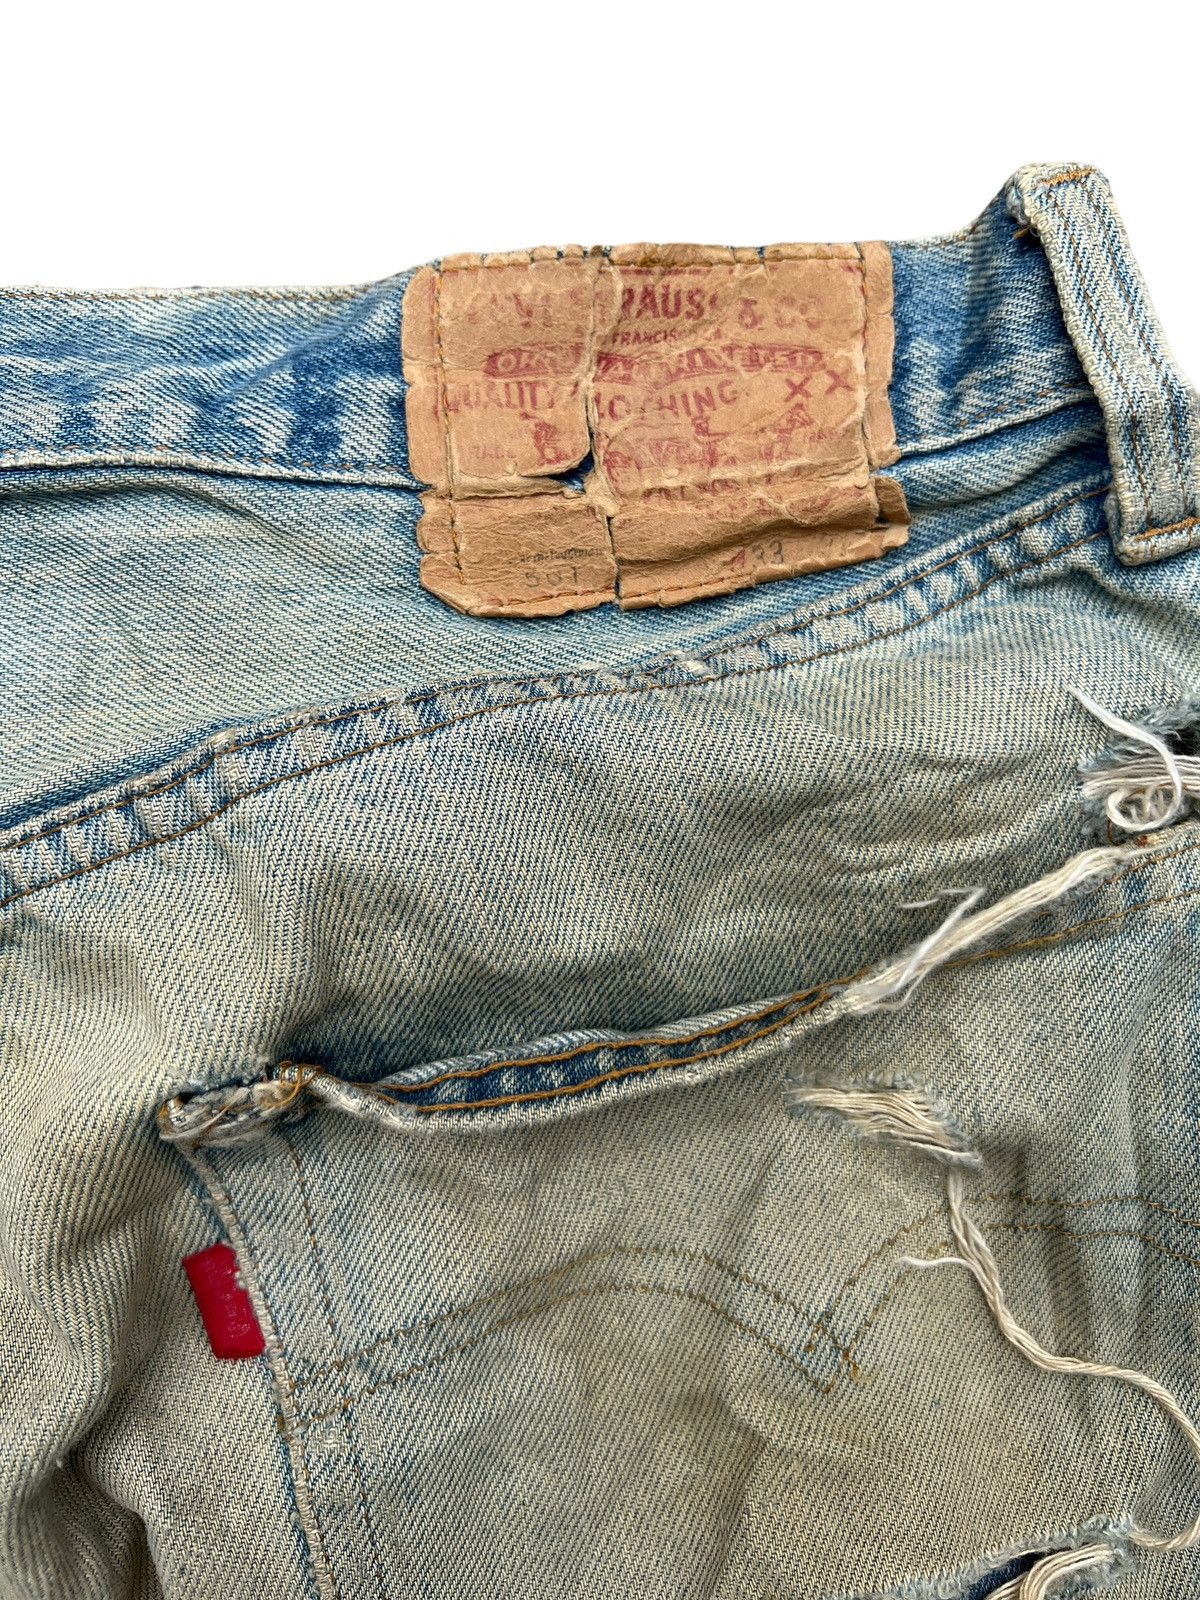 Vintage 70s Levi’s 501 Selvedge Distressed Denim Jeans 32x31 - 7